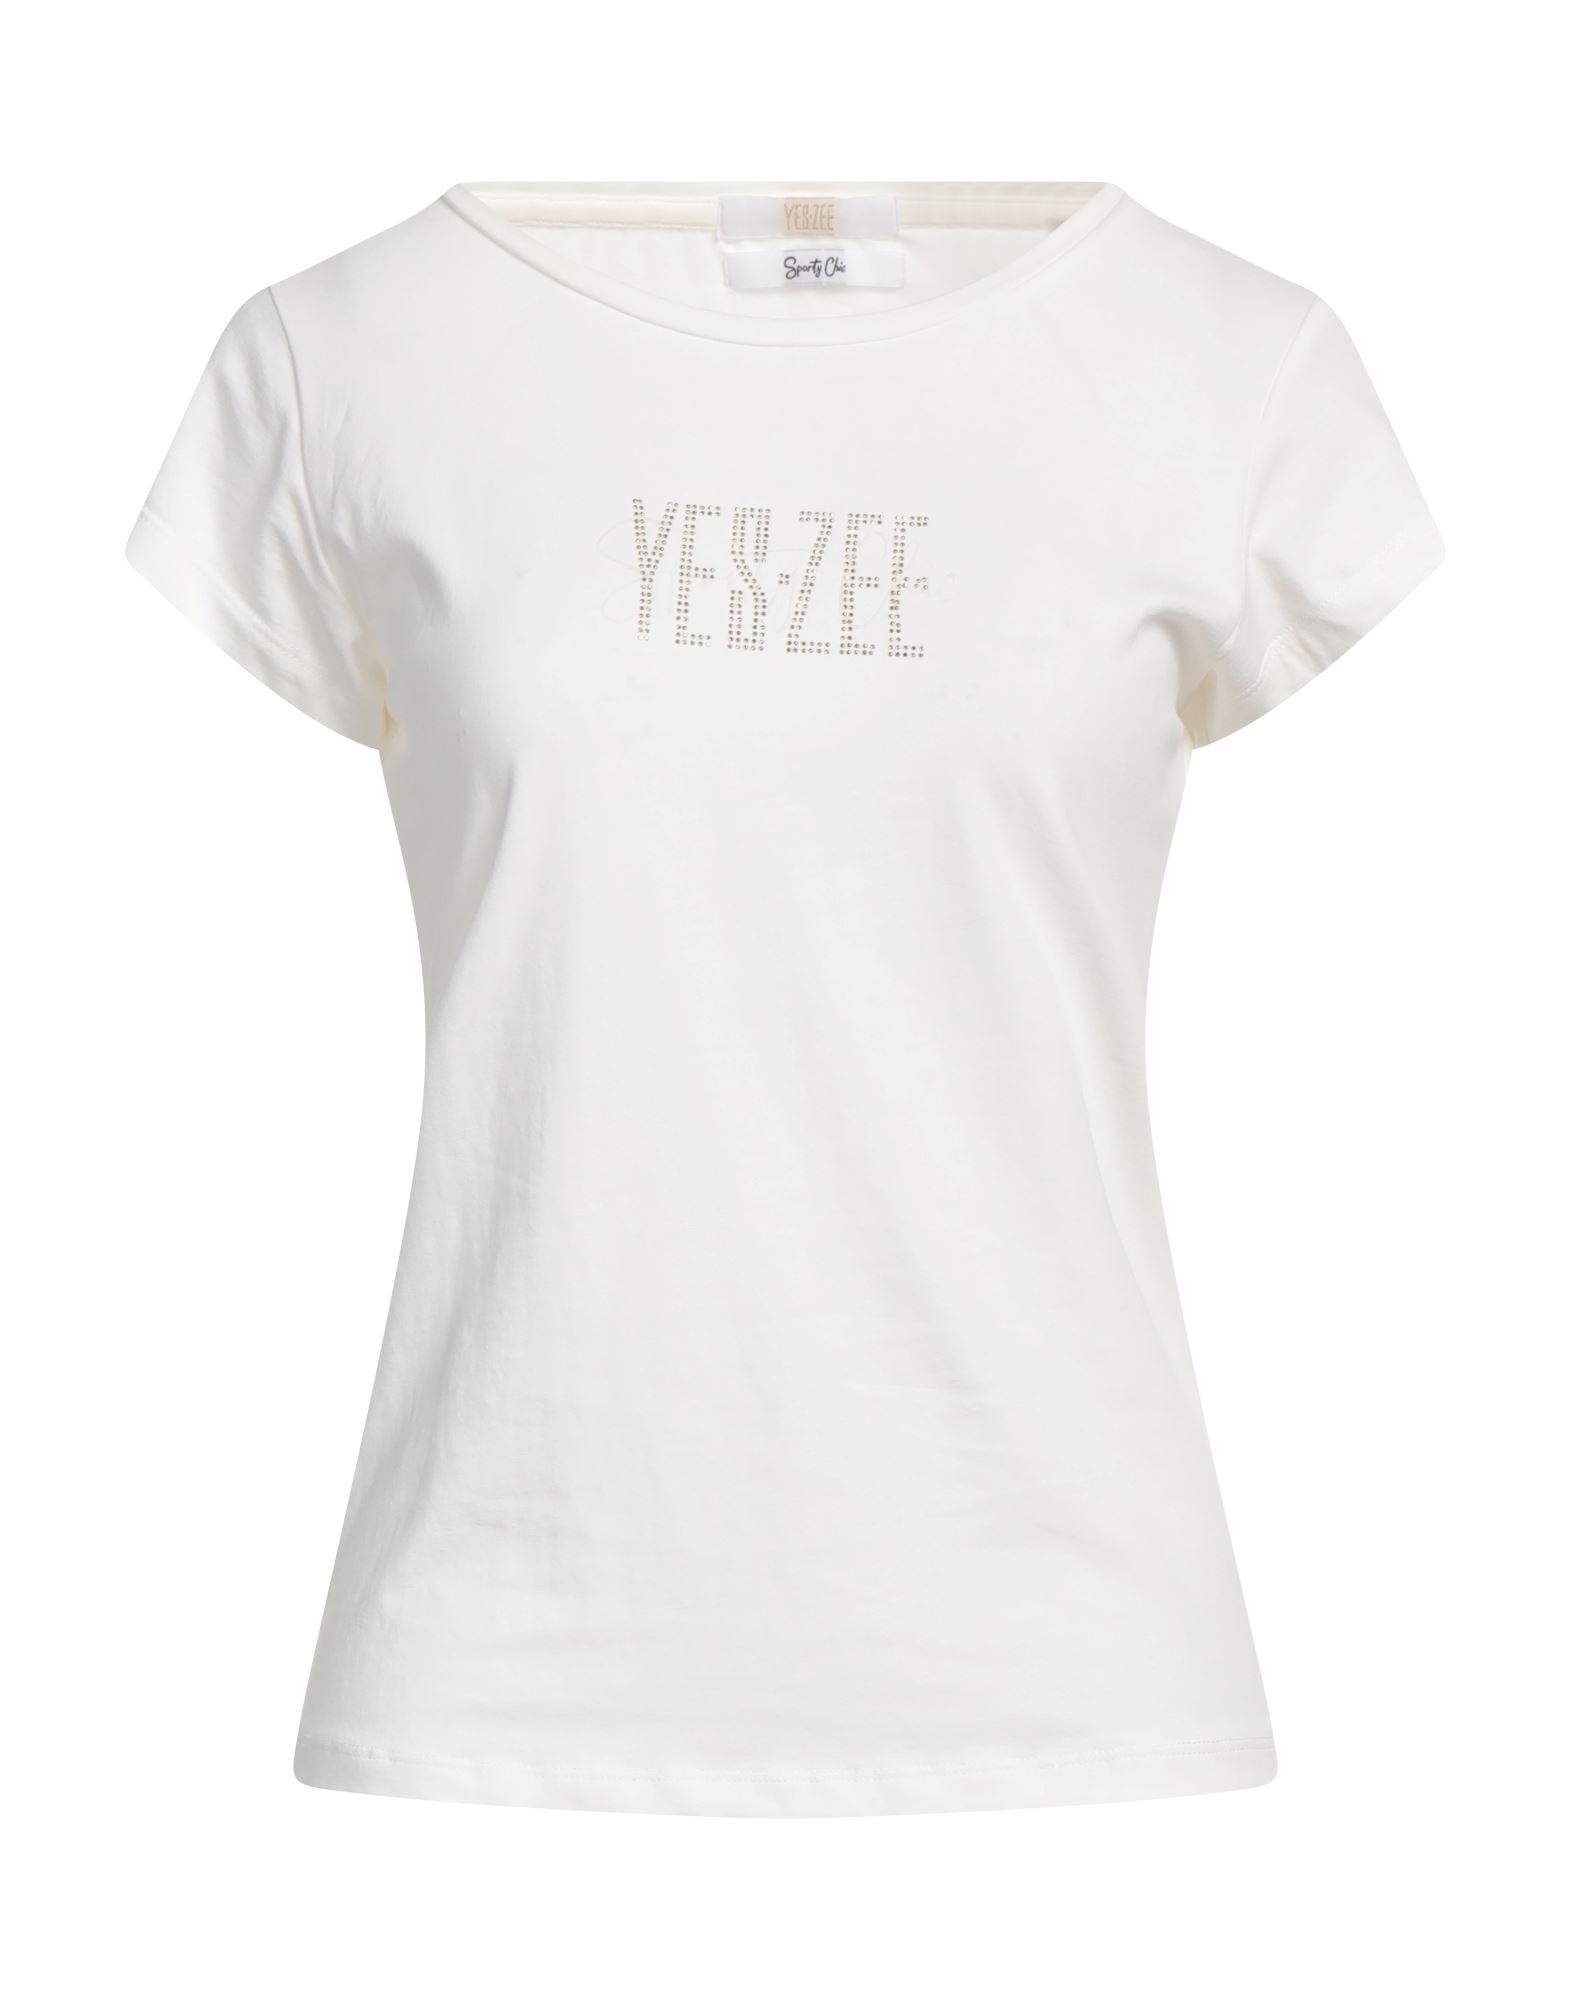 YES ZEE by ESSENZA T-shirts Damen Off white von YES ZEE by ESSENZA